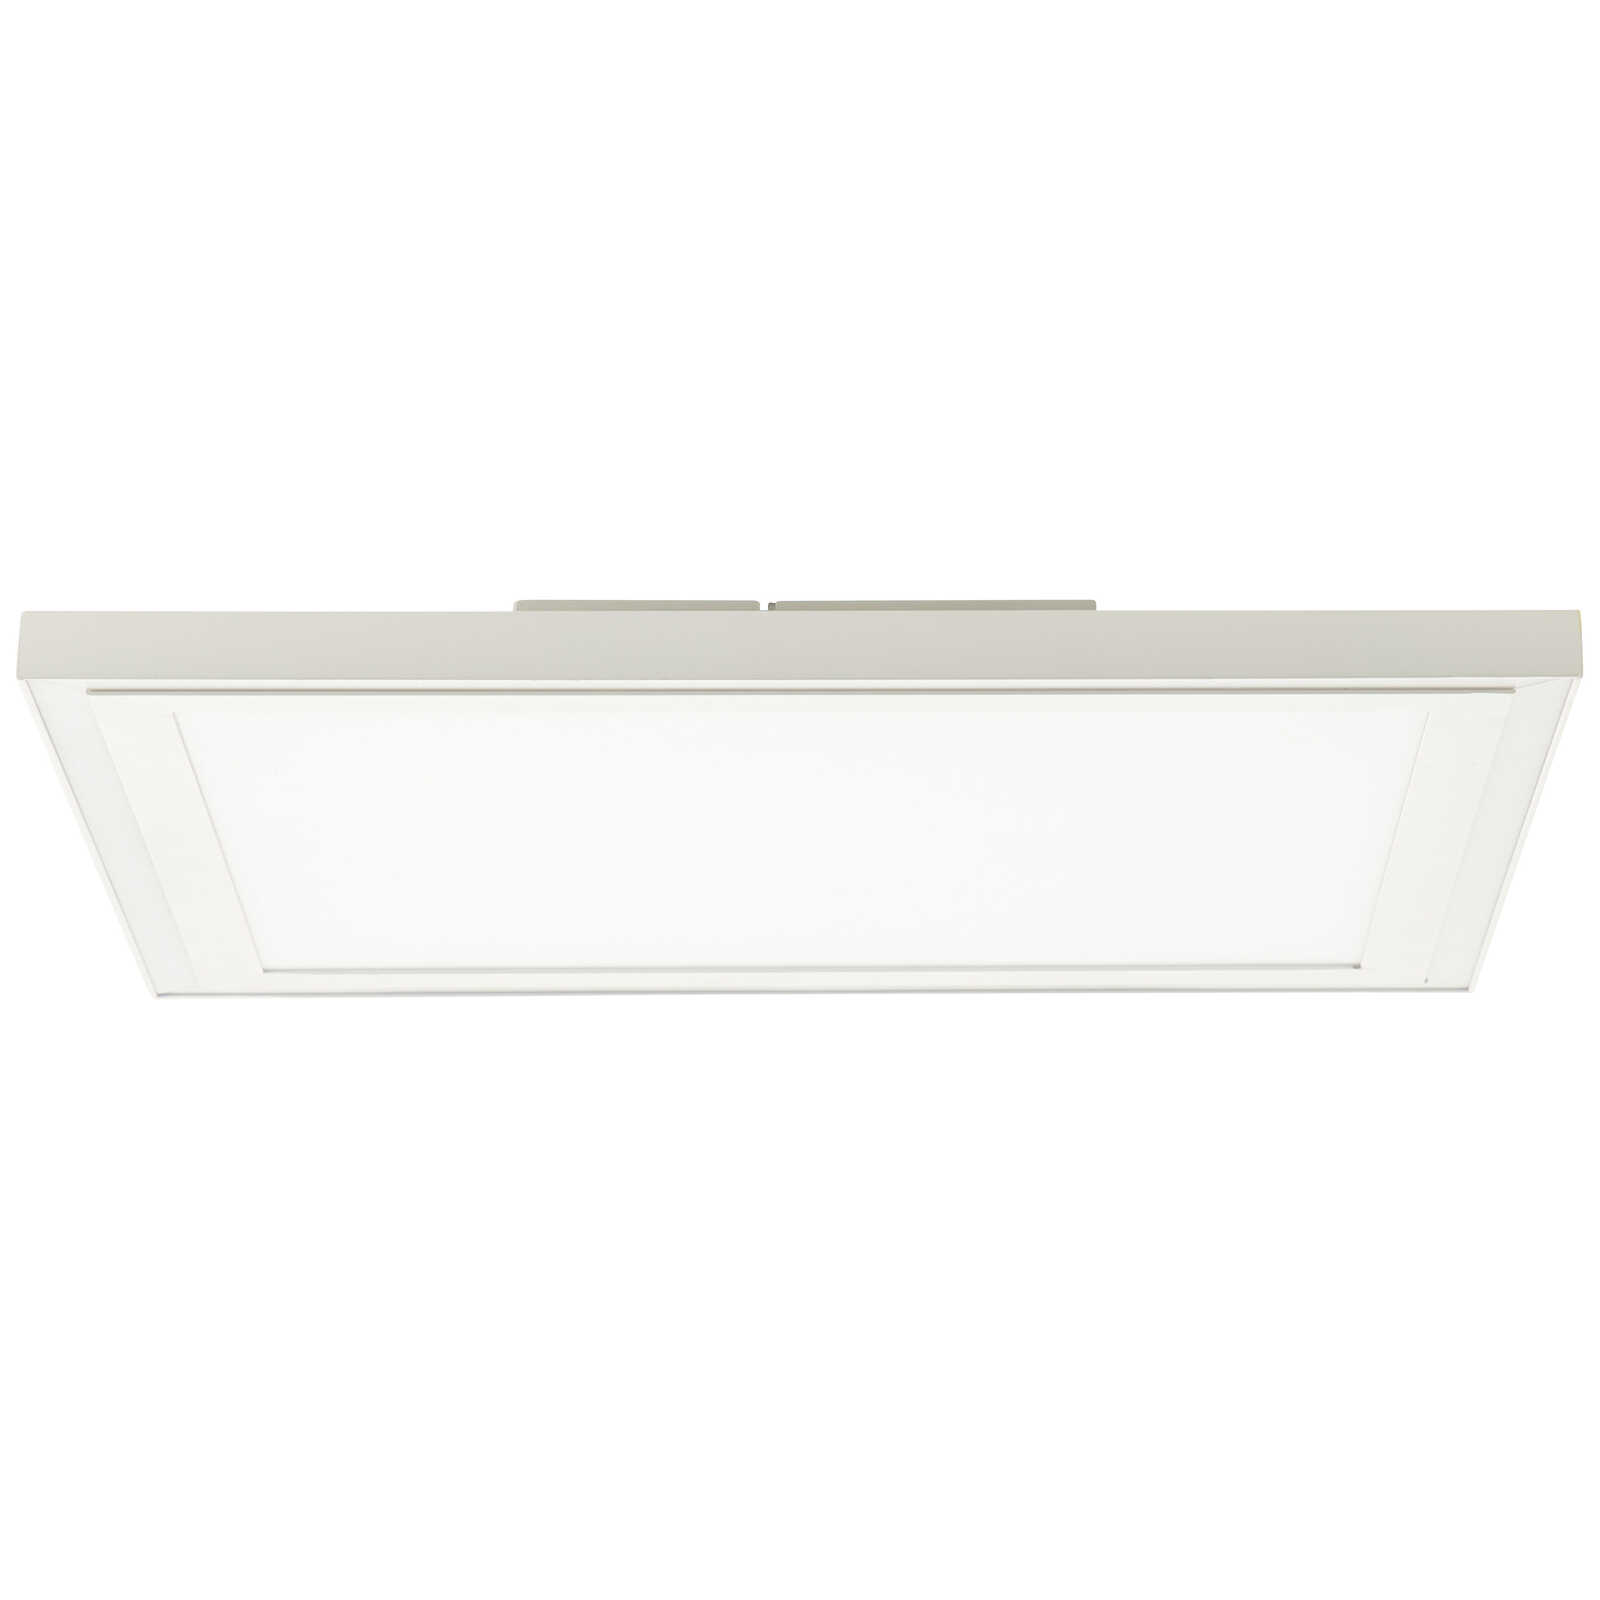             Metal ceiling light - Klaas 1 - White
        